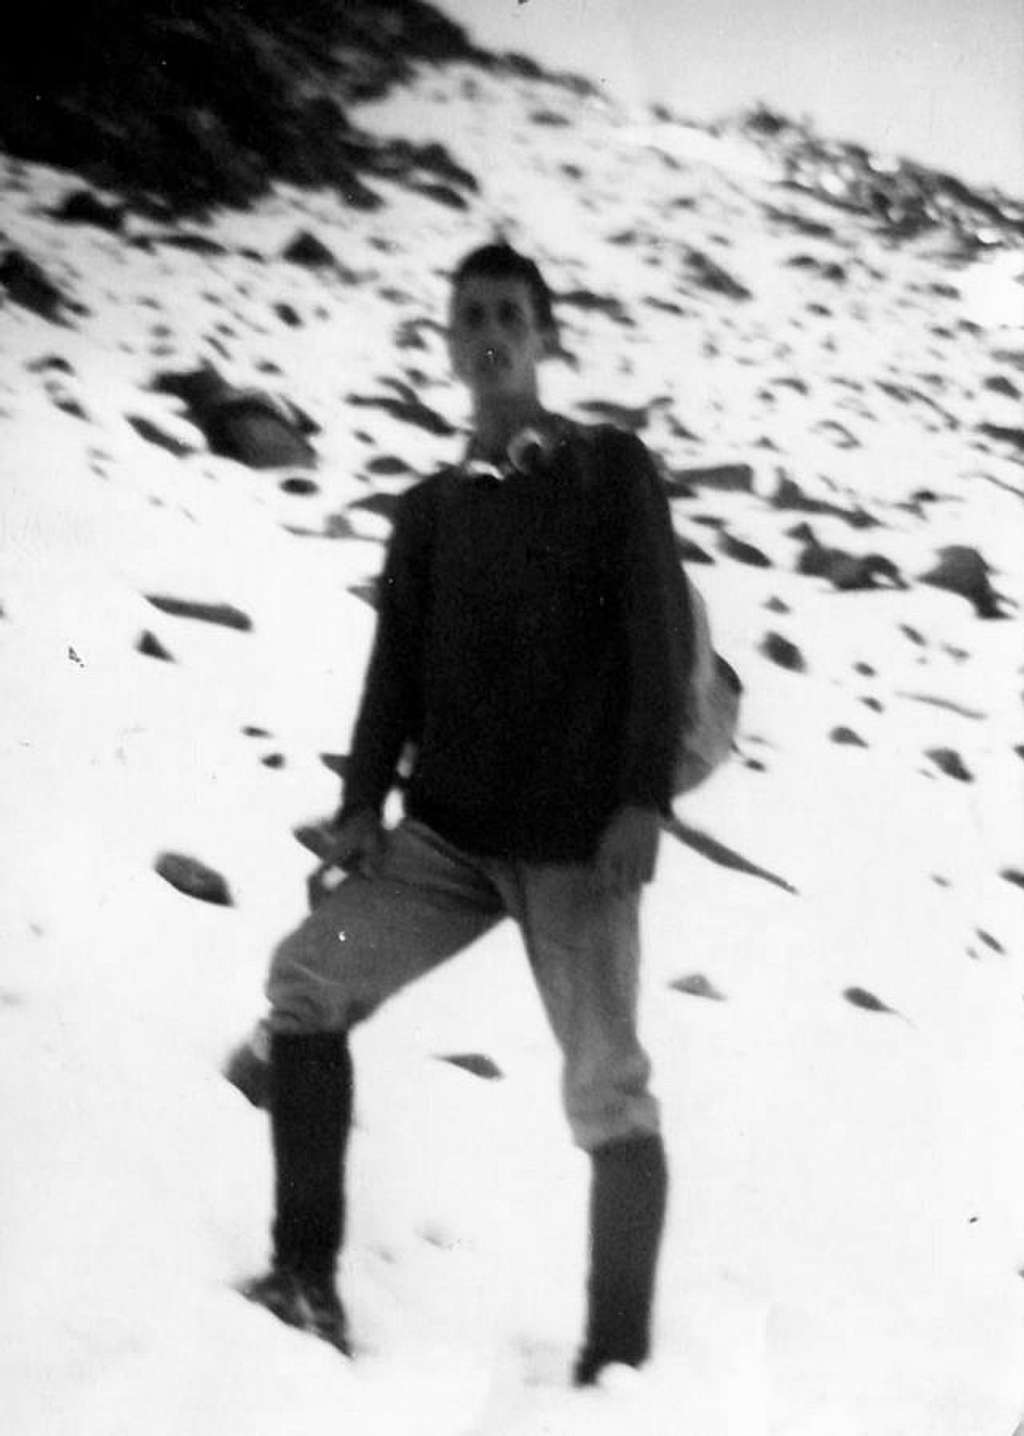 PIC GARIN (3481m) under the Shoulder 3208m on 1966 